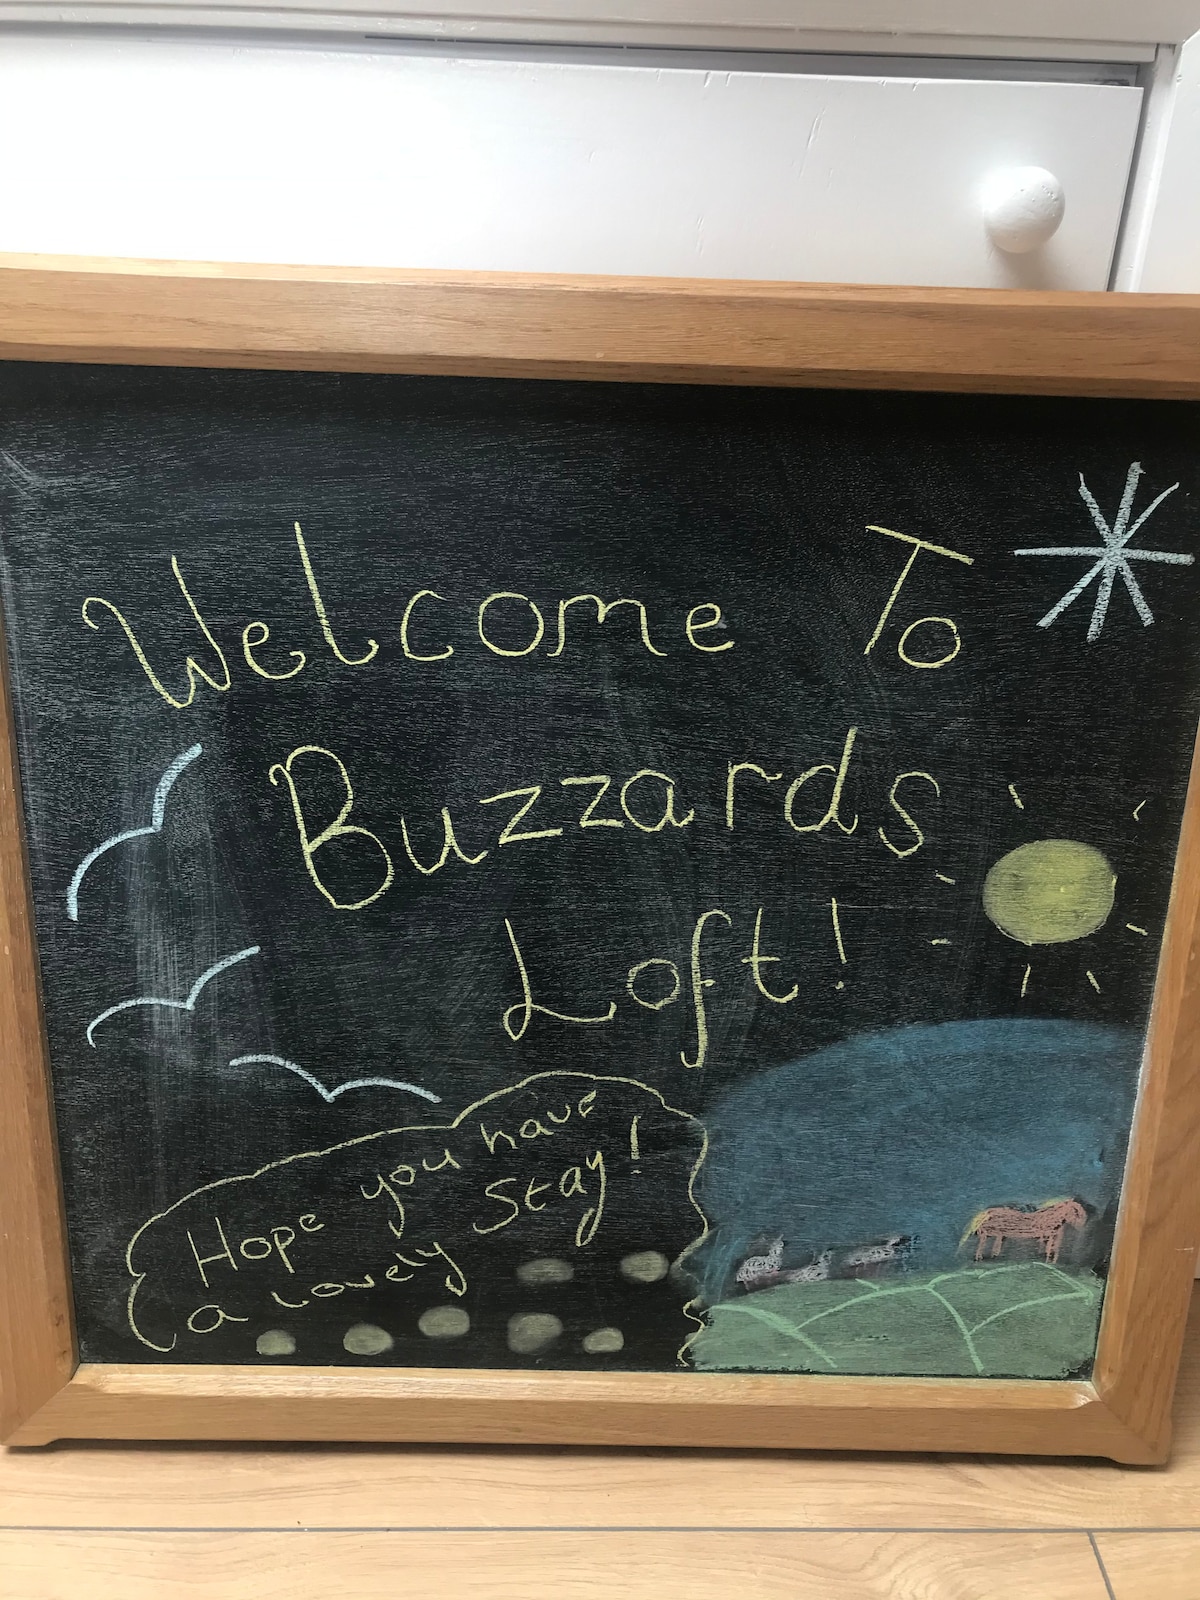 Buzzard 's Loft, Poyntzpass